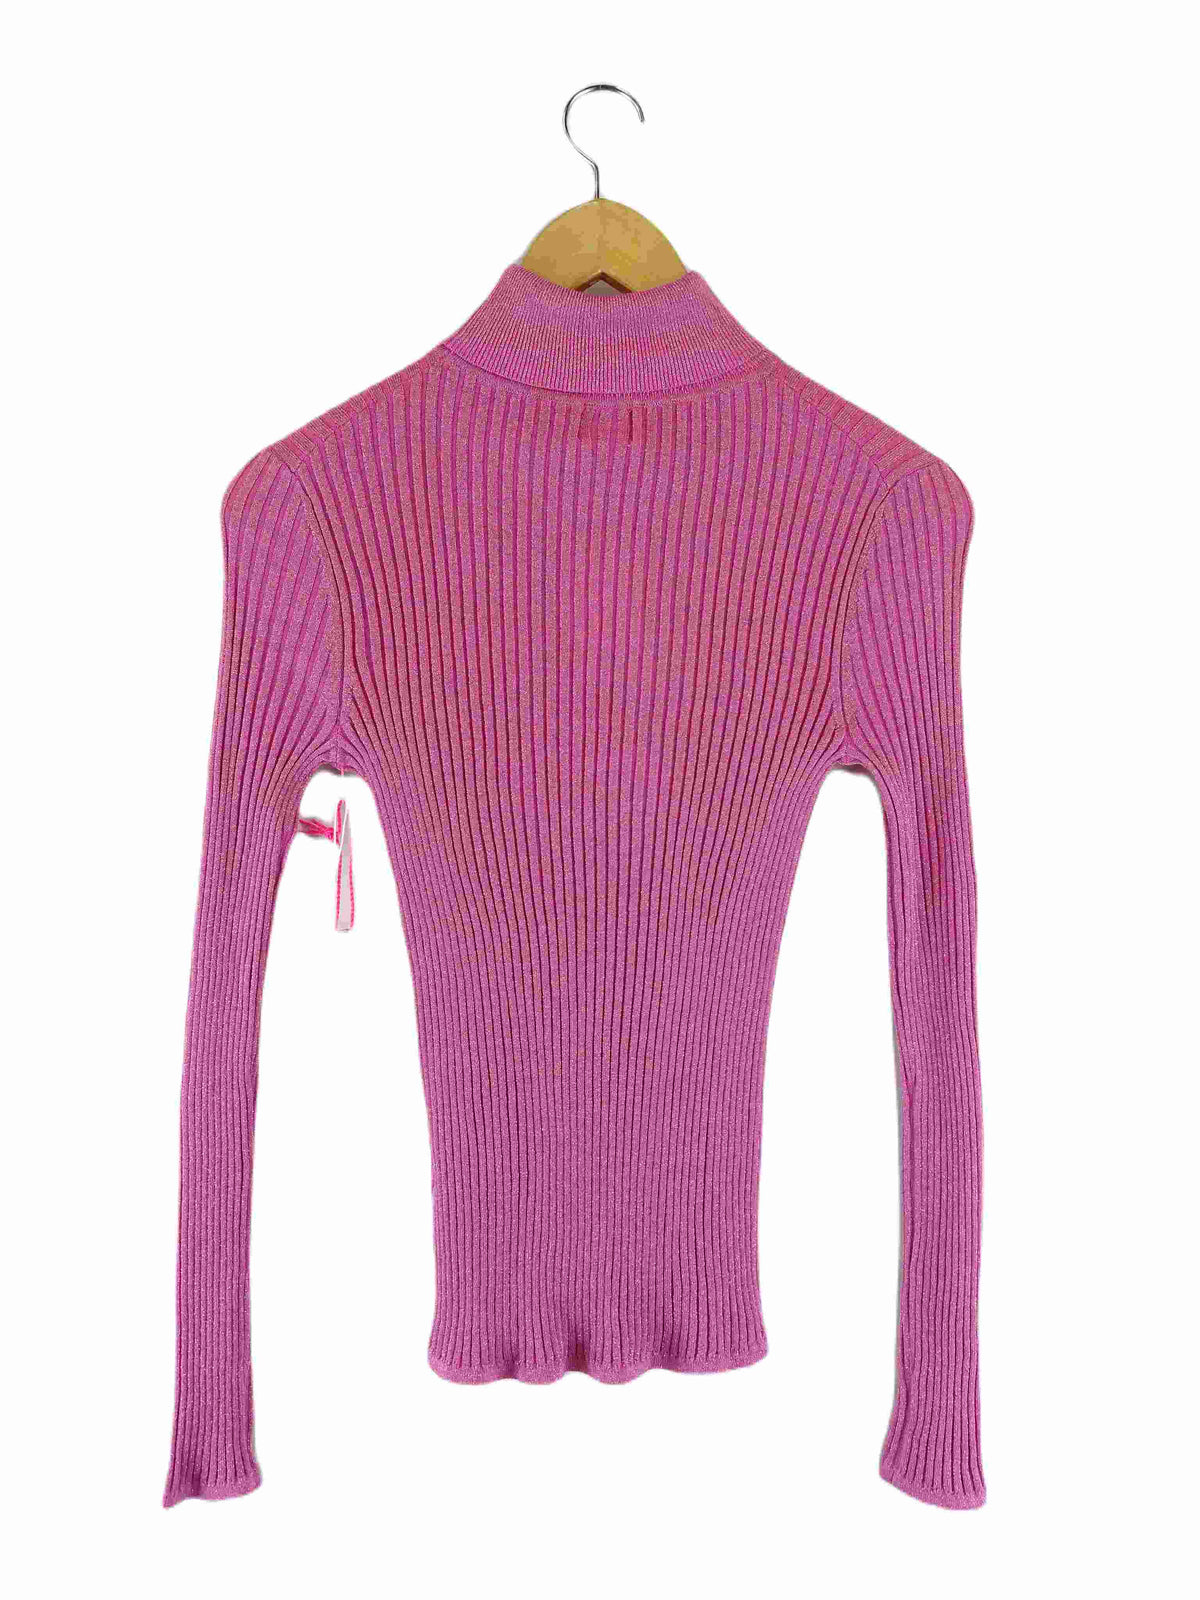 Gorman Pink Sparkly Knit Turtleneck 10